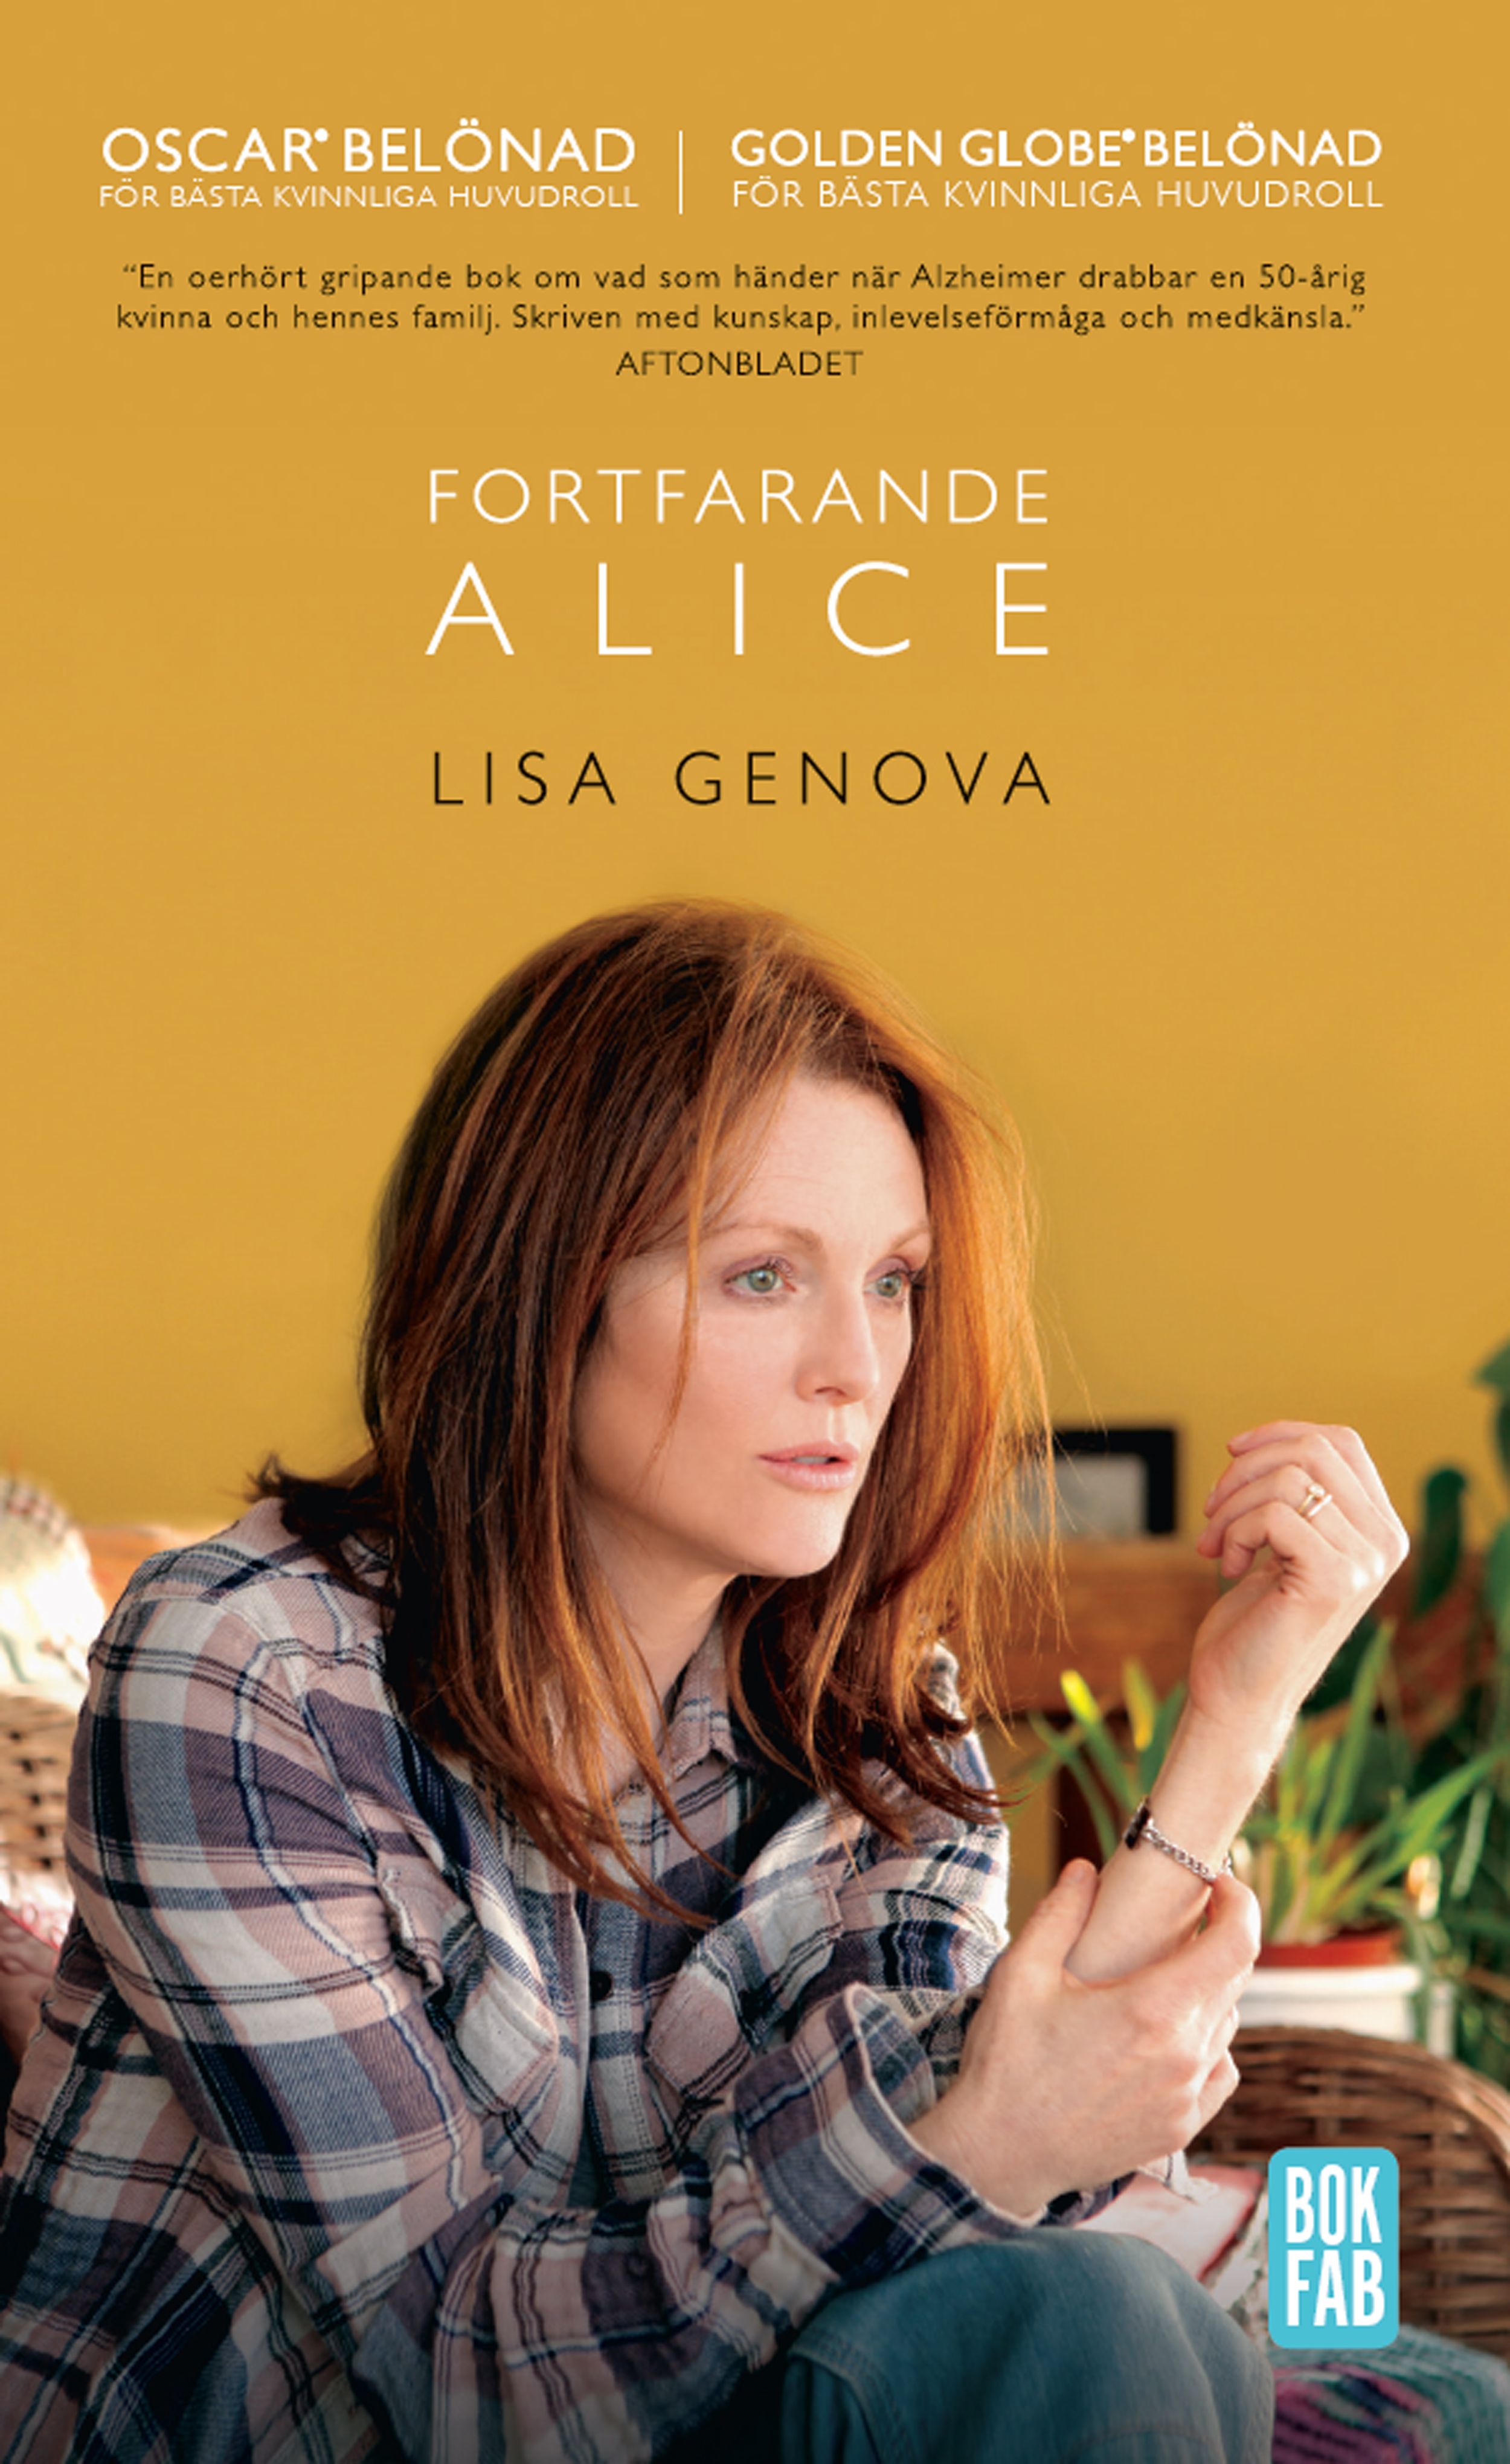 Fortfarande Alice, eBook by Lisa Genova